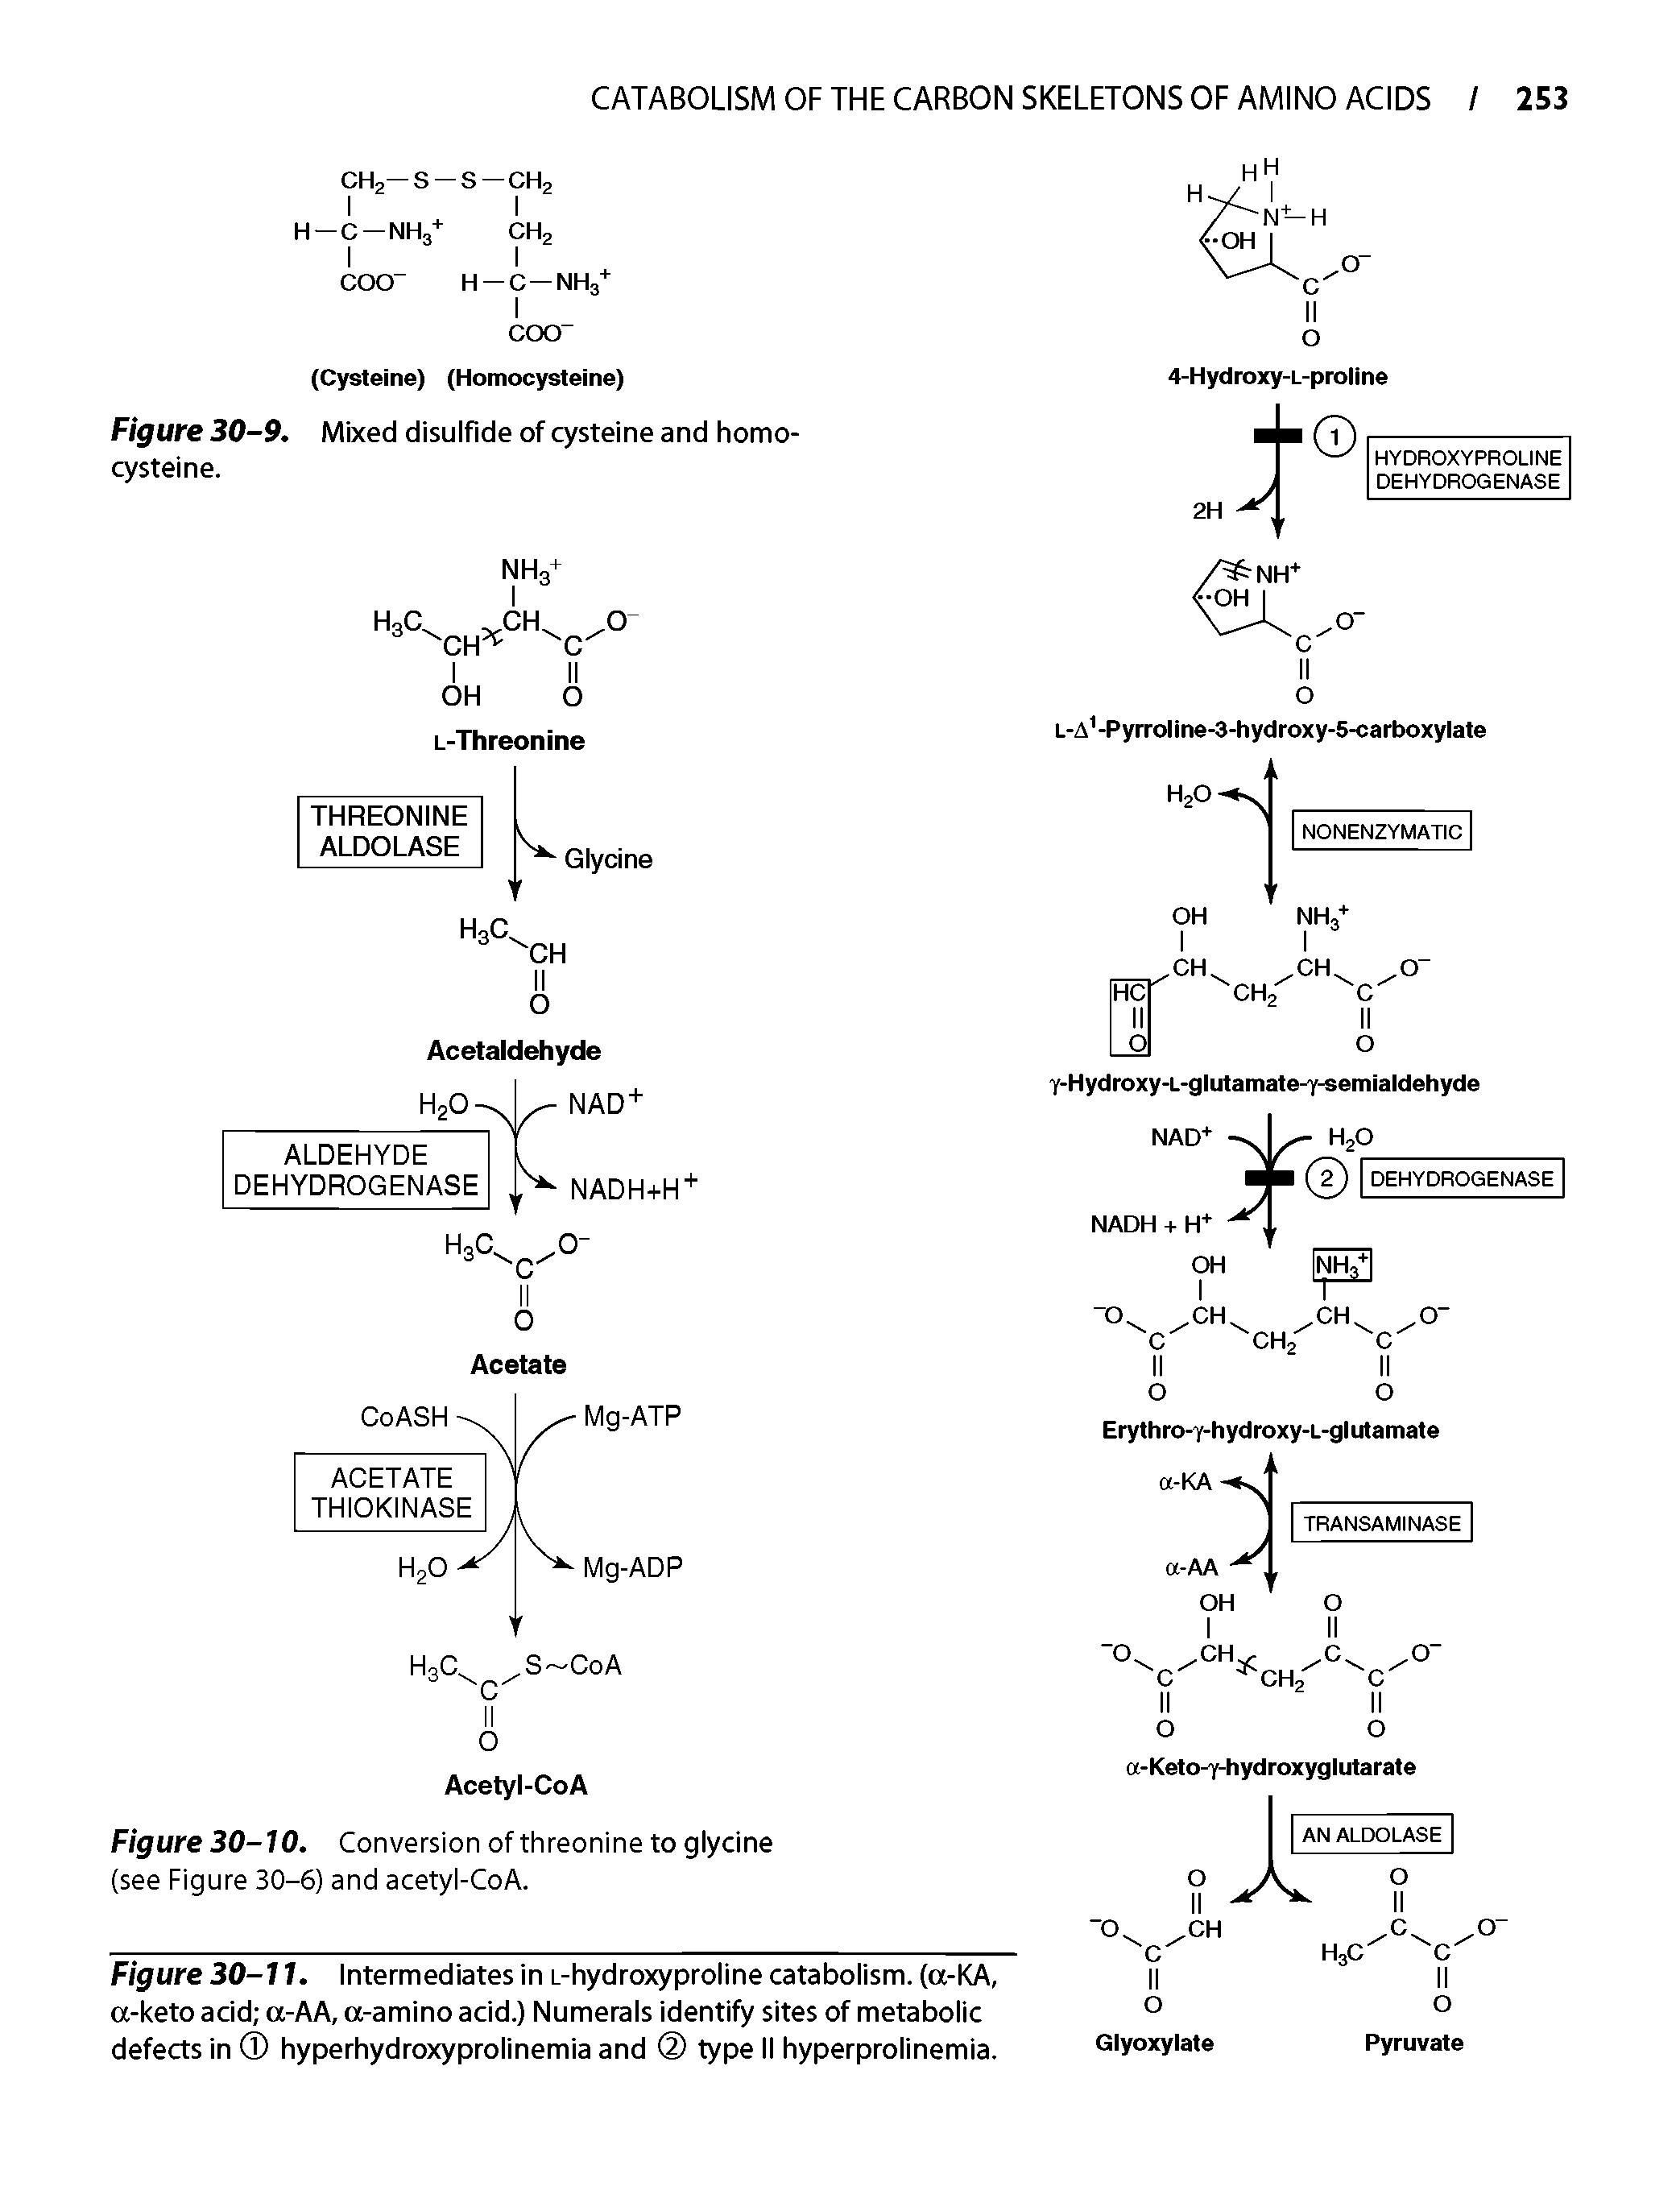 Figure 30-11. Intermediates in i-hydroxyproline catabolism. (a-KA, a-keto acid a-AA, a-amino acid.) Numerals identify sites of metabolic defects in hyperhydroxyprolinemia and type II hyperprolinemia.